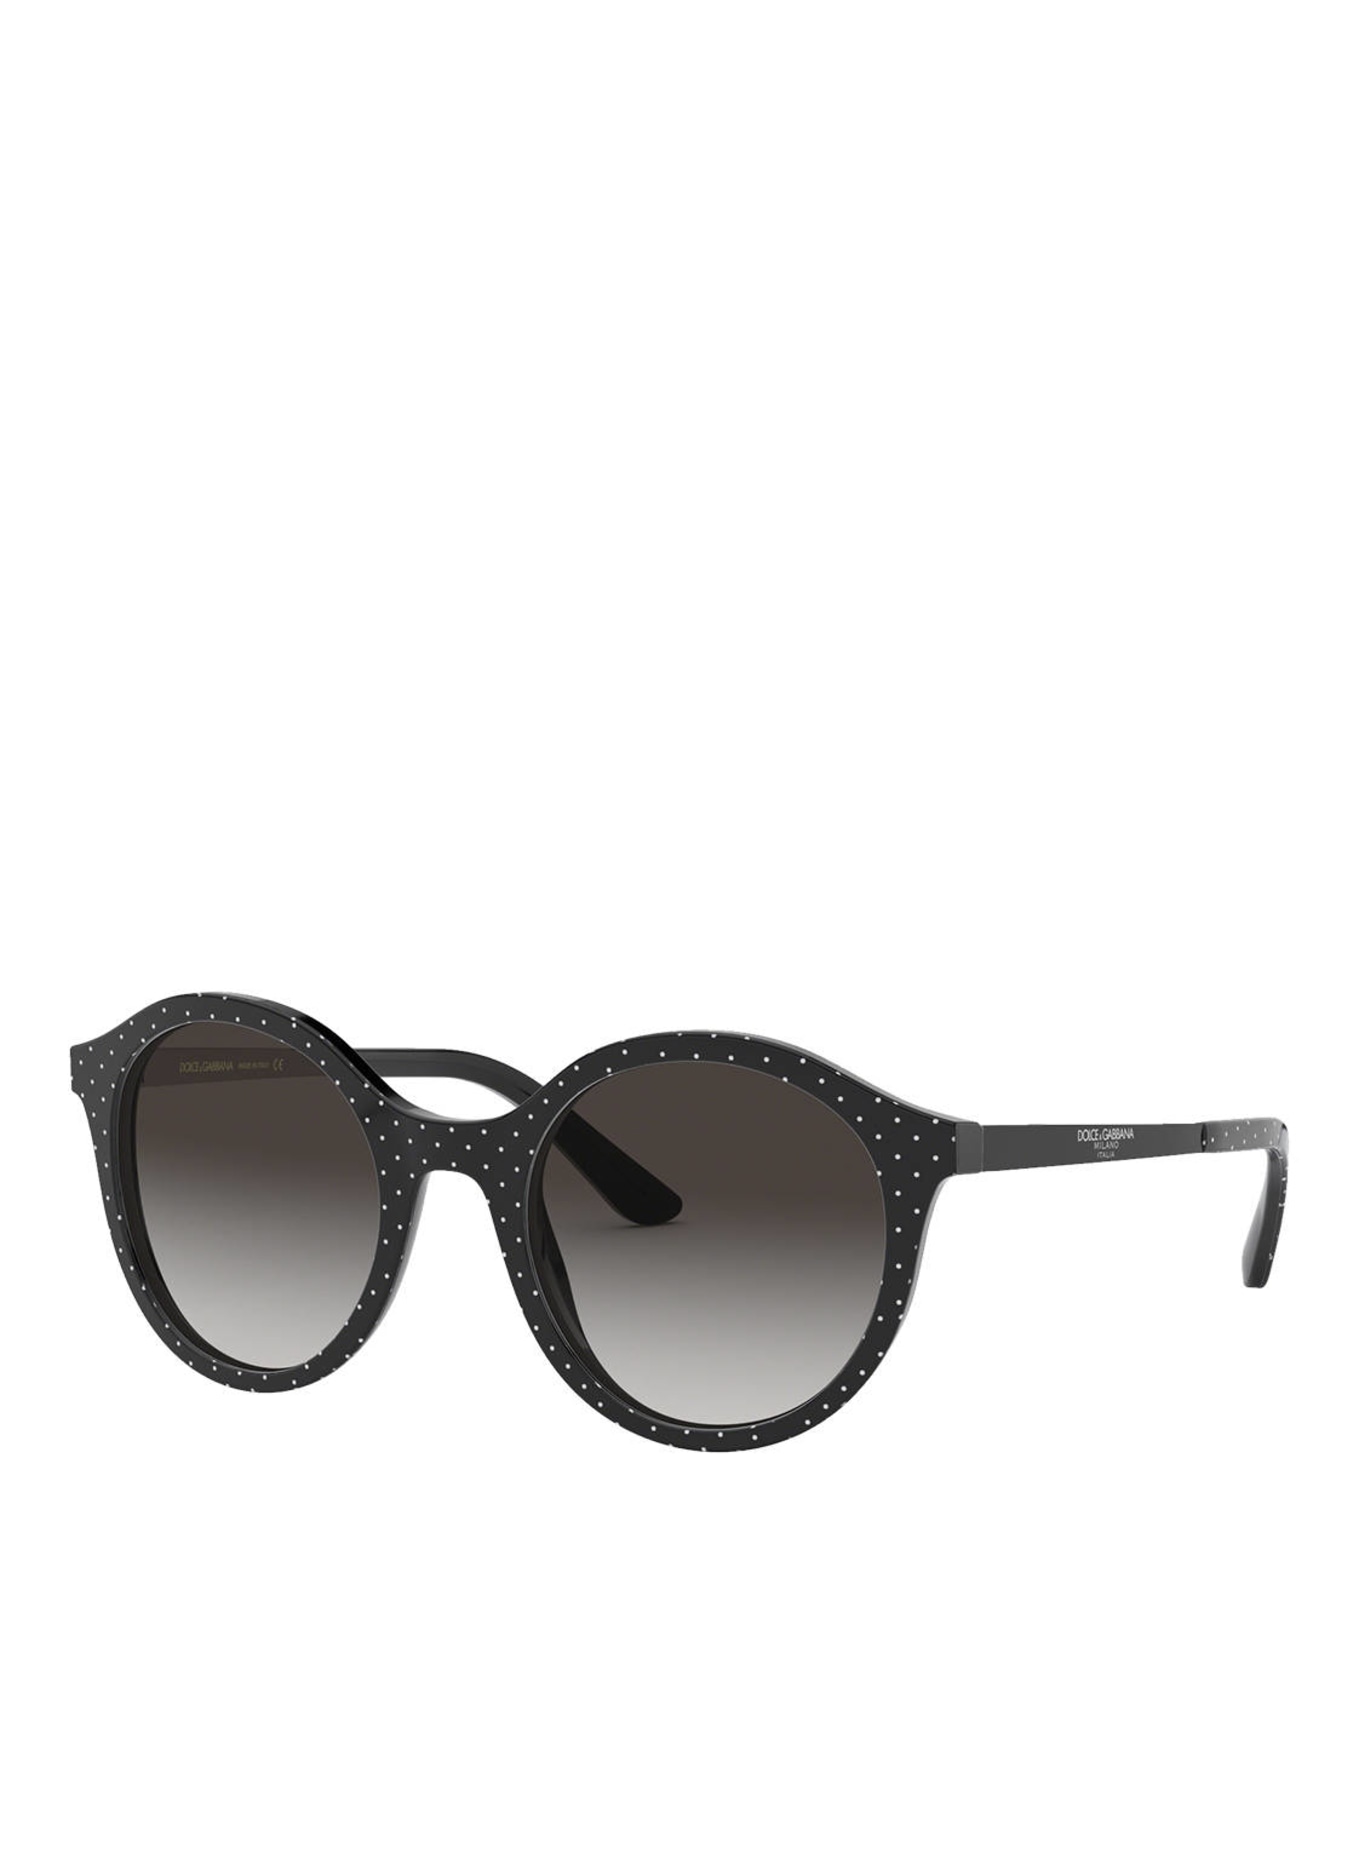 DOLCE & GABBANA Sunglasses DG 4358, Color: 3126/8G - BLACK/DARK GRAY GRADIENT (Image 1)